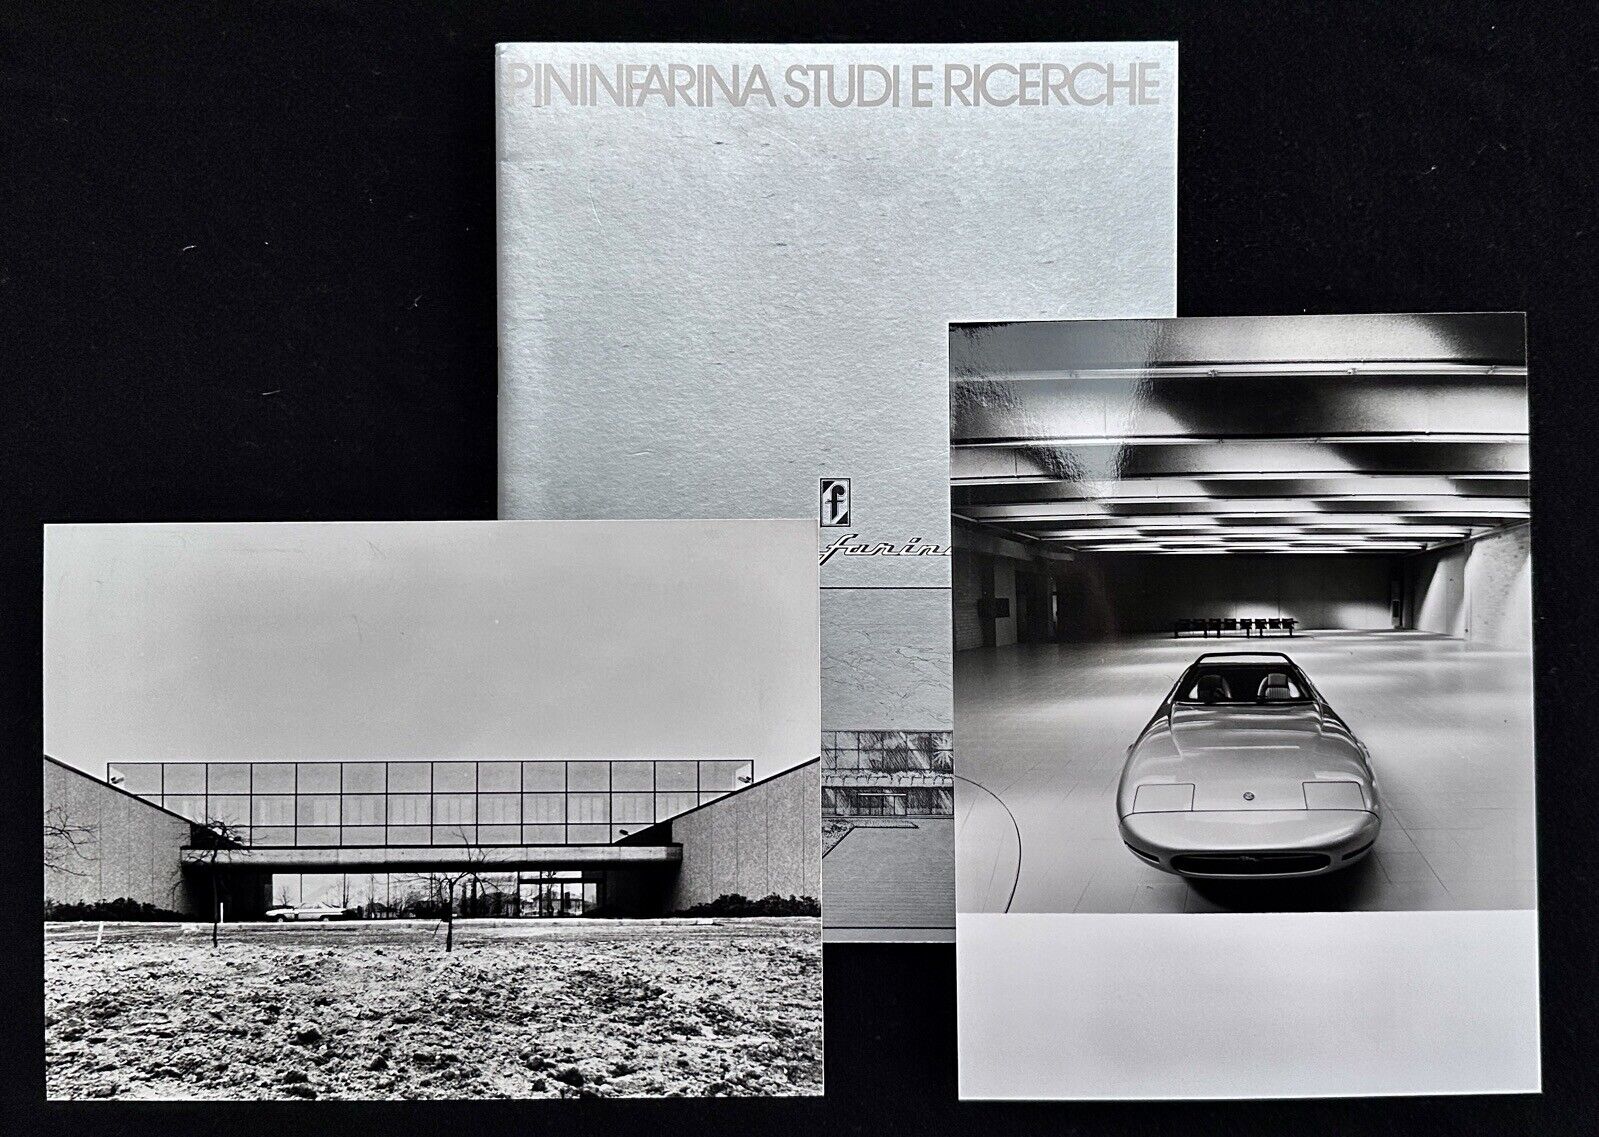 Pininfarina Study & Research Center 1982 Press Kit Brochure Photos ITAL/ENG/FR